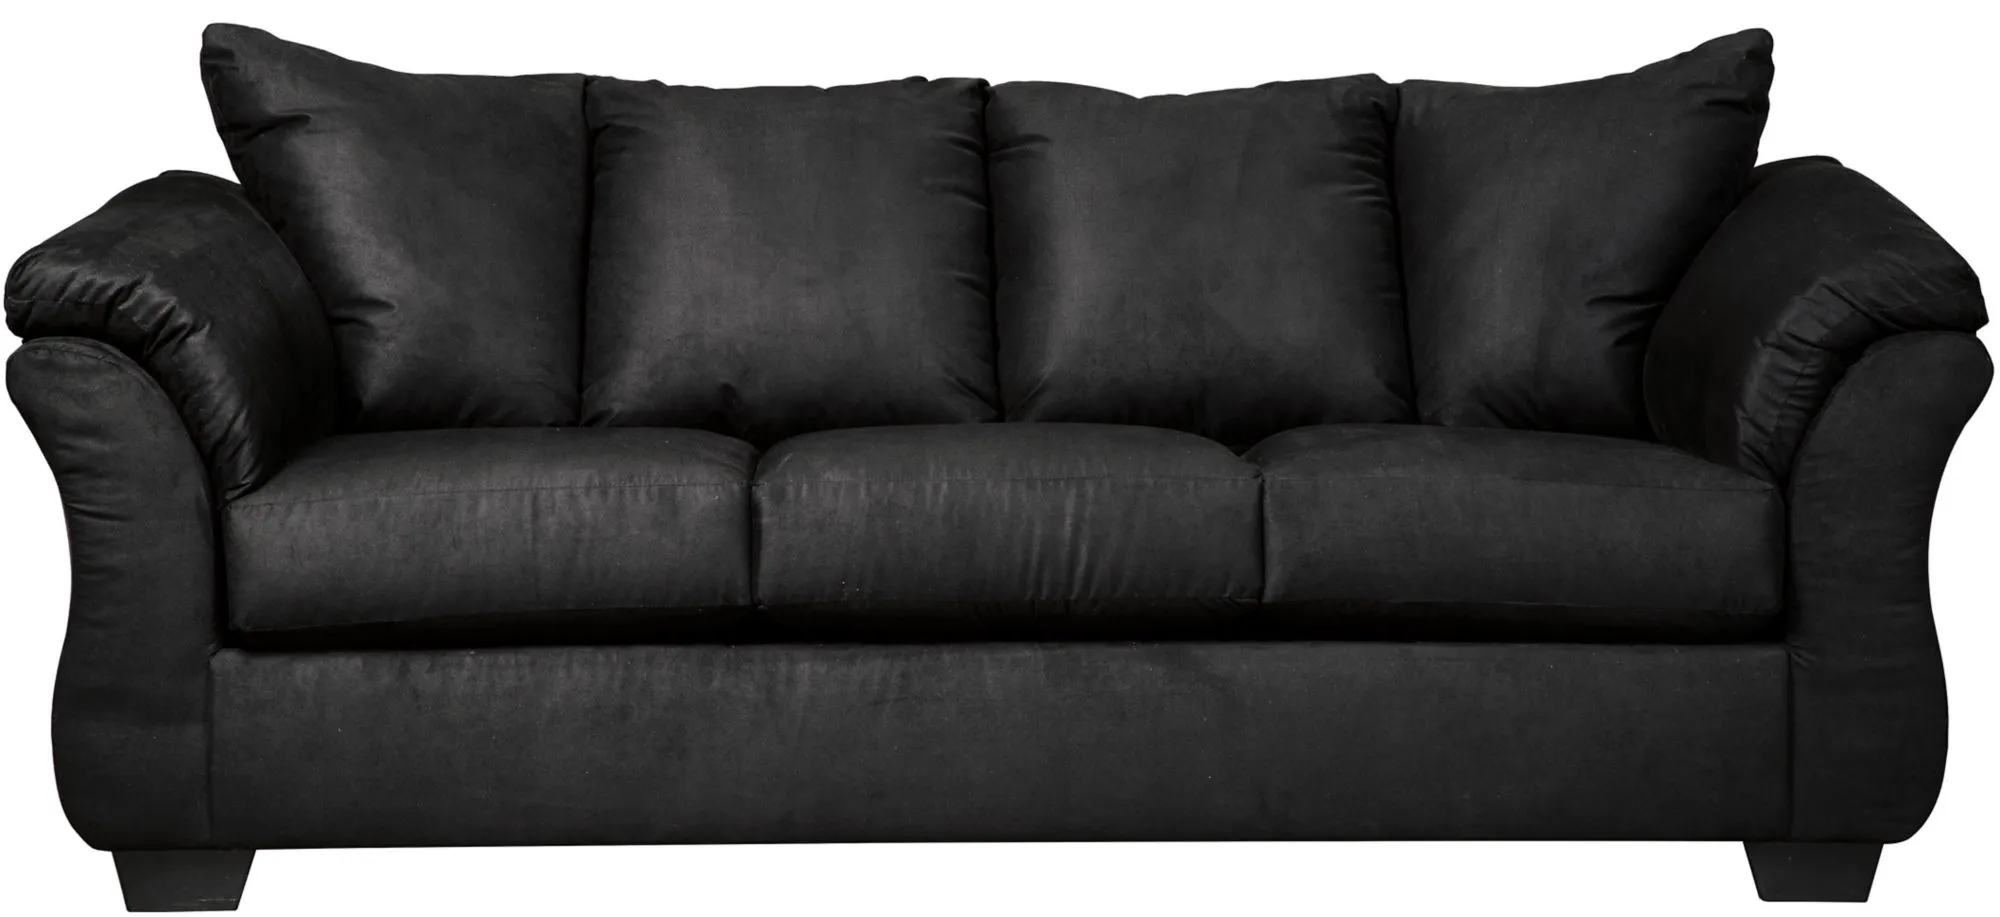 Whitman Sofa in Black by Ashley Furniture